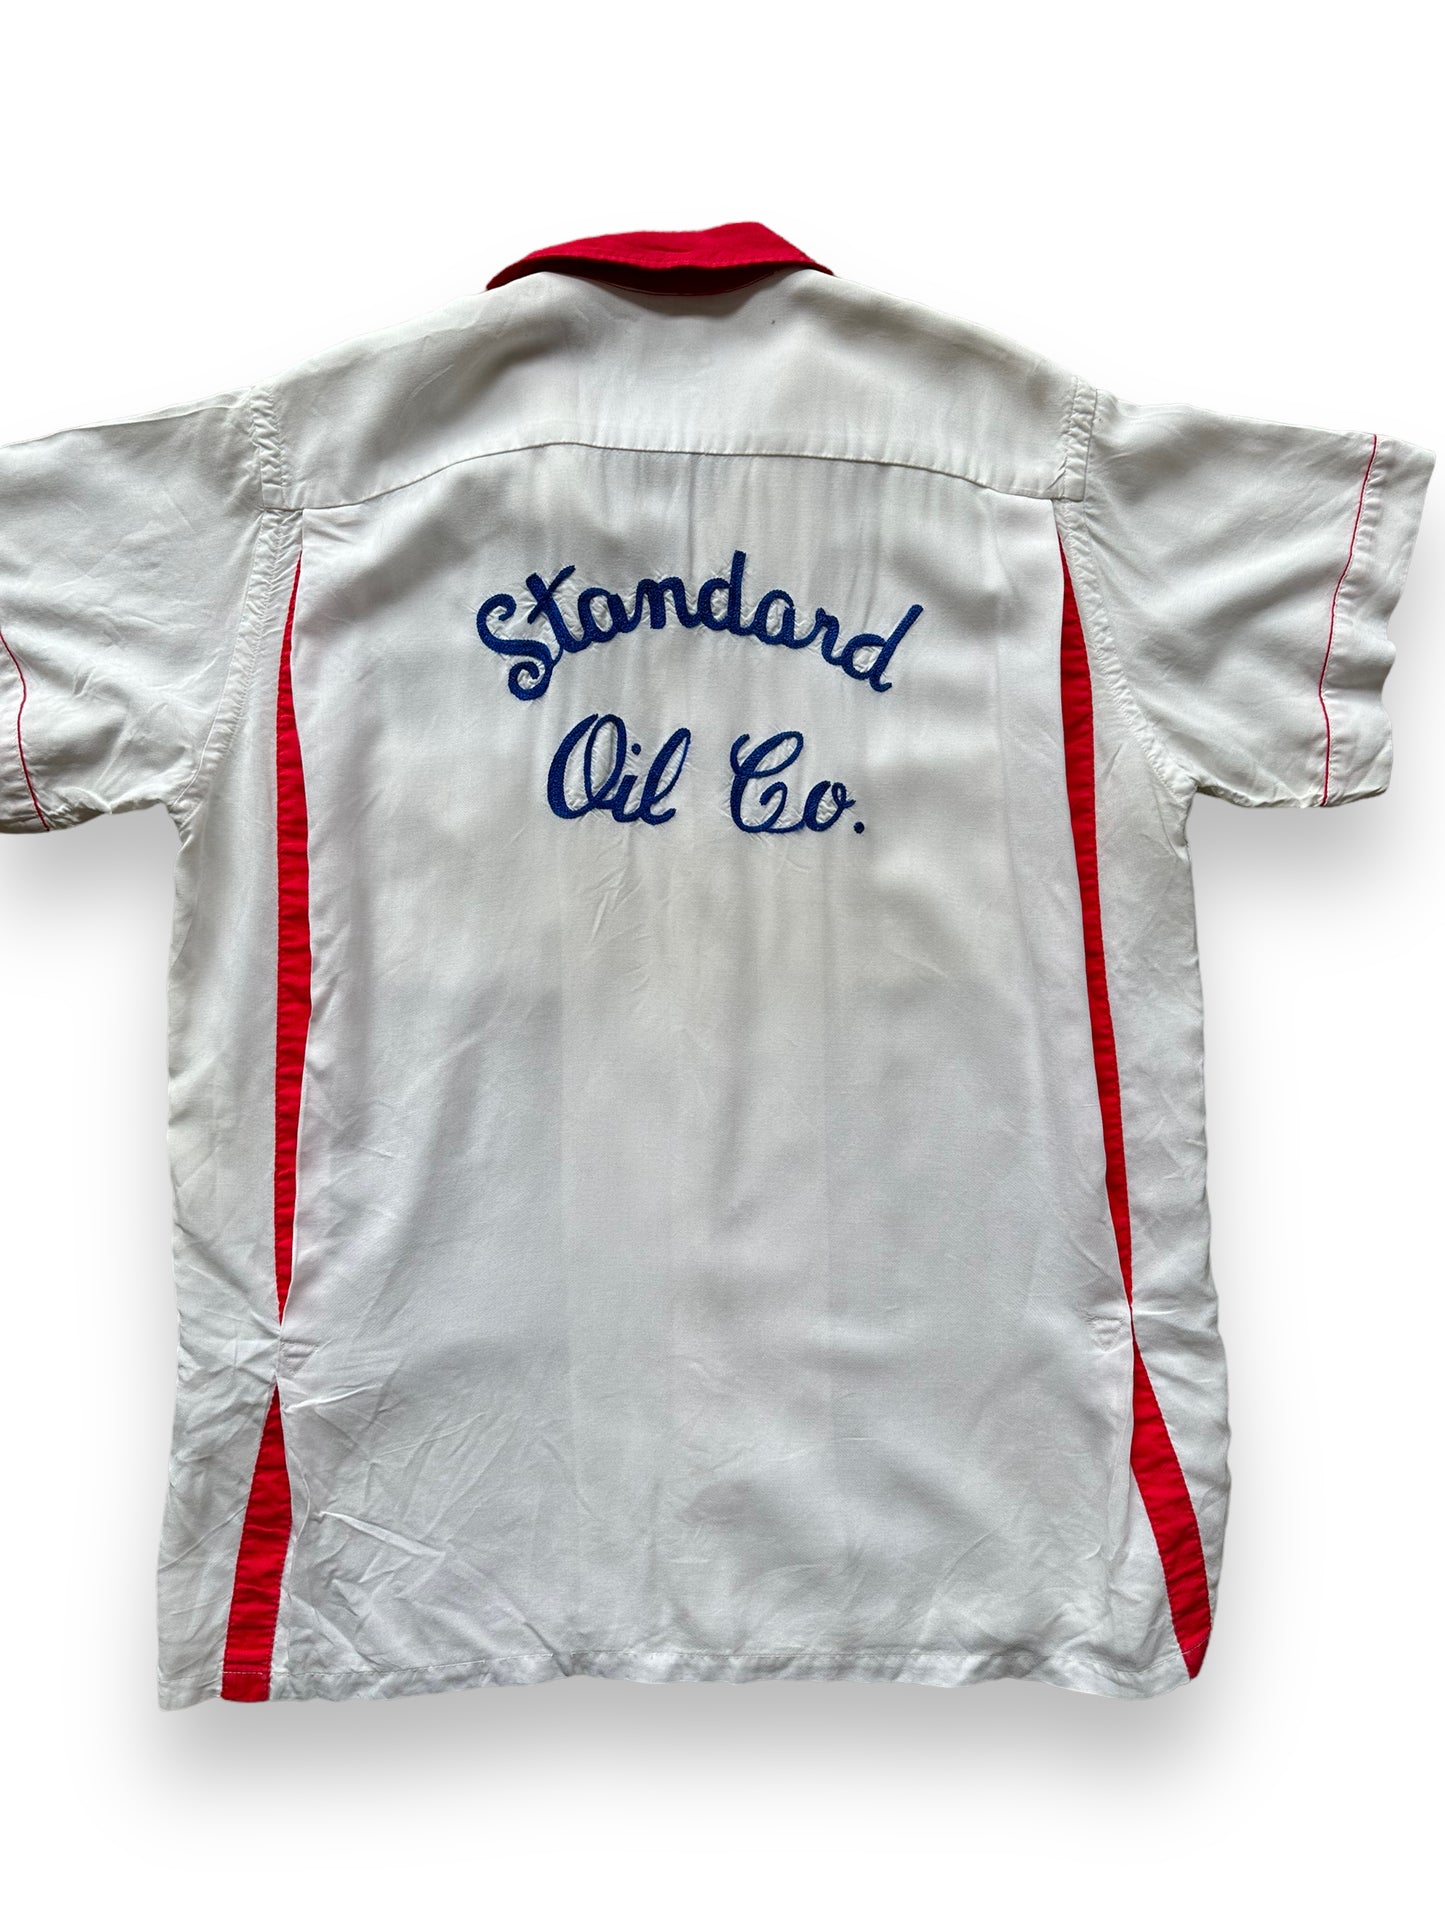 Back close up of Vintage "Standard Oil Co." Chainstitched Bowling Shirt SZ M | Vintage Bowling Shirt Seattle | Barn Owl Vintage Seattle